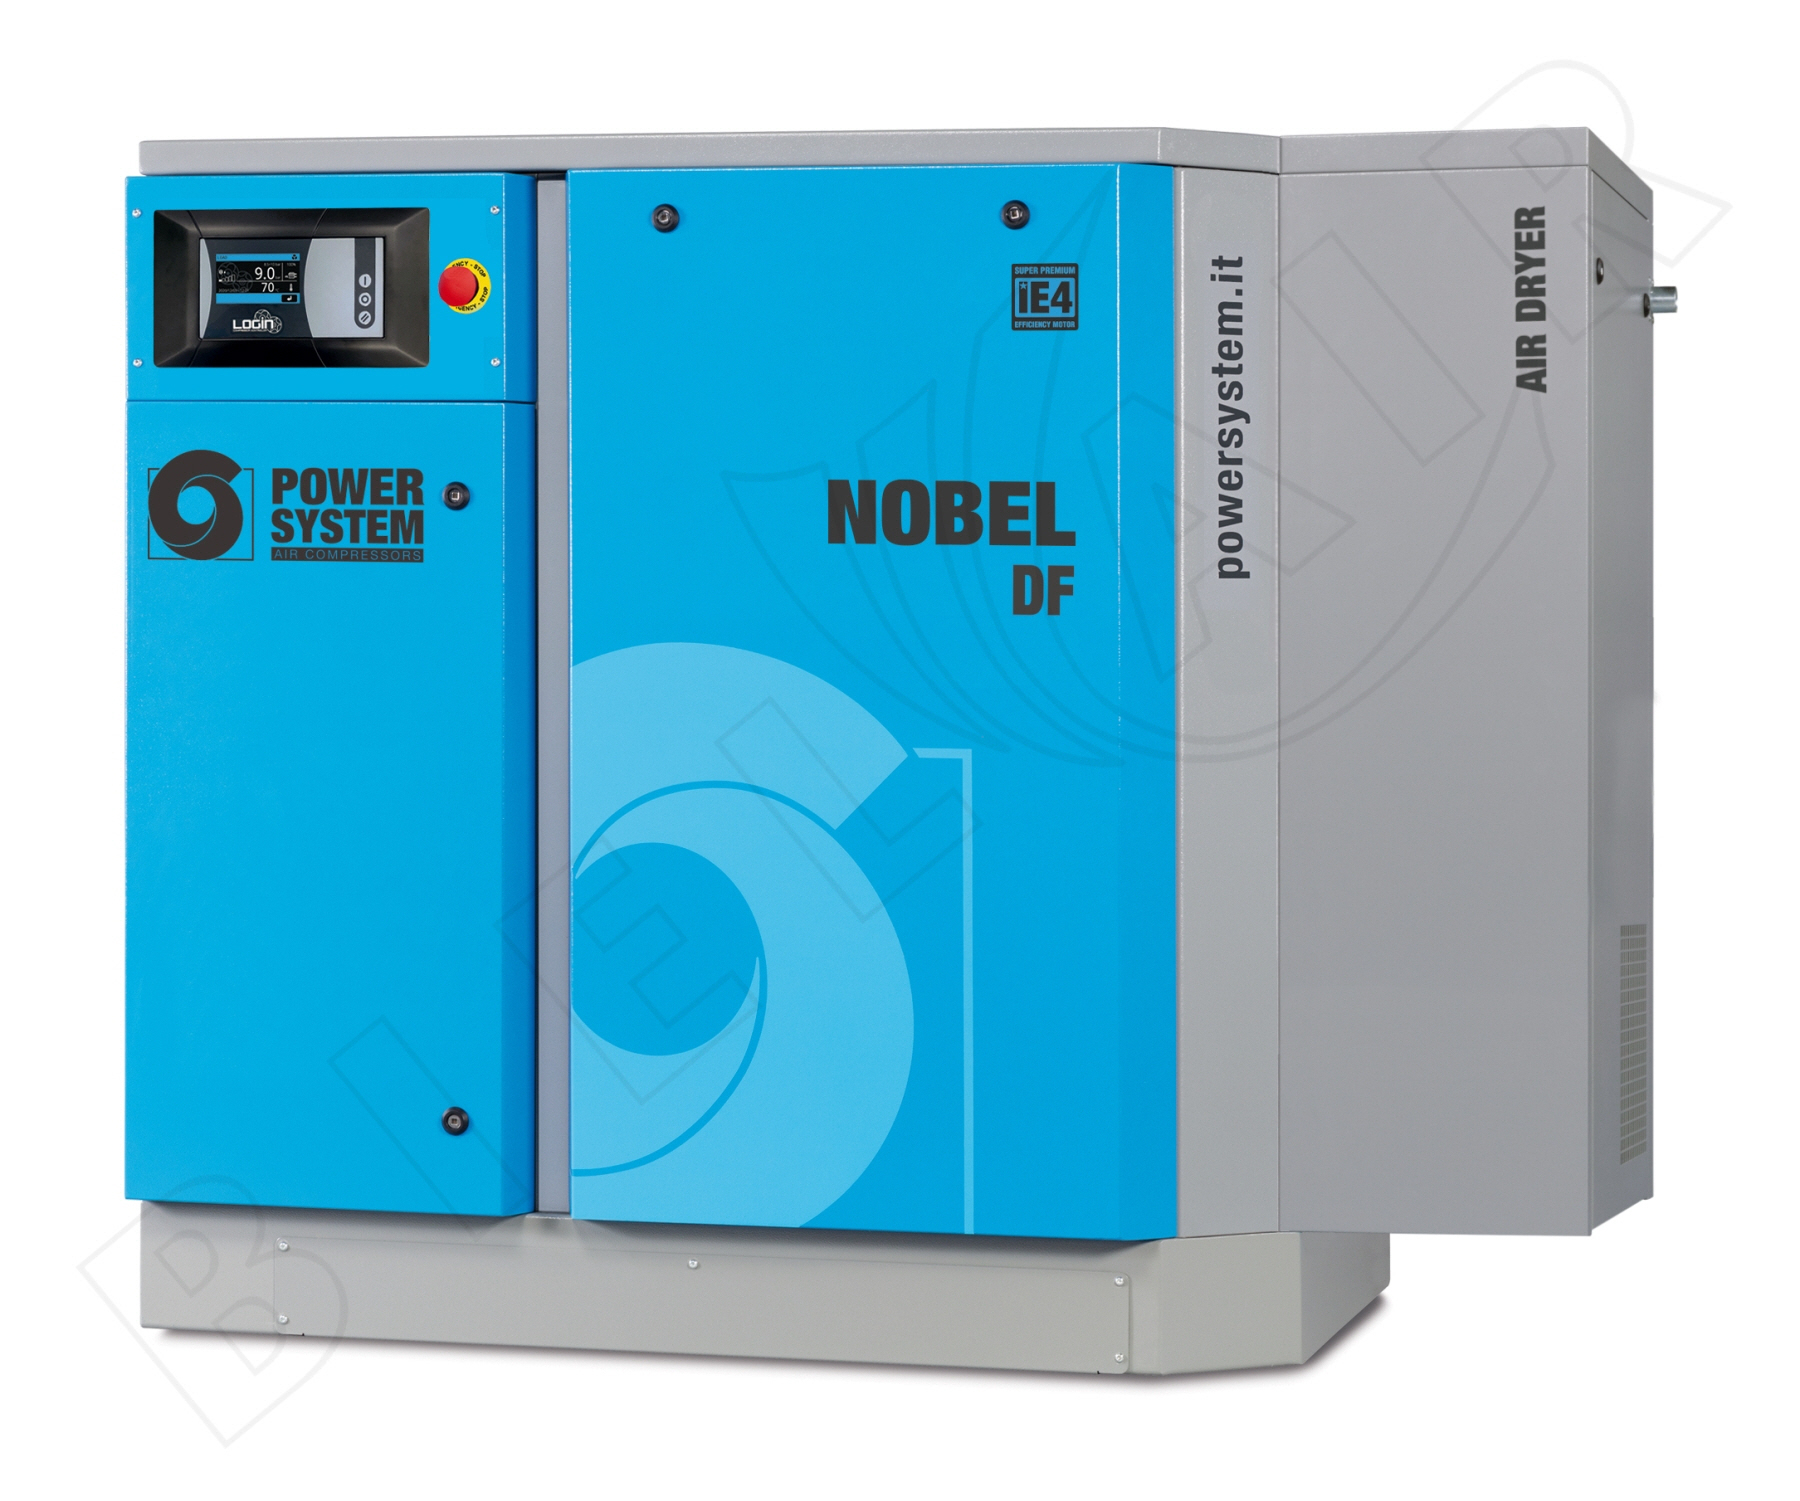 POWERSYSTEM Schraubenkompressor NOBEL 18.5-10 DF (IE3) LOGIN Standard mit Kältetrockner